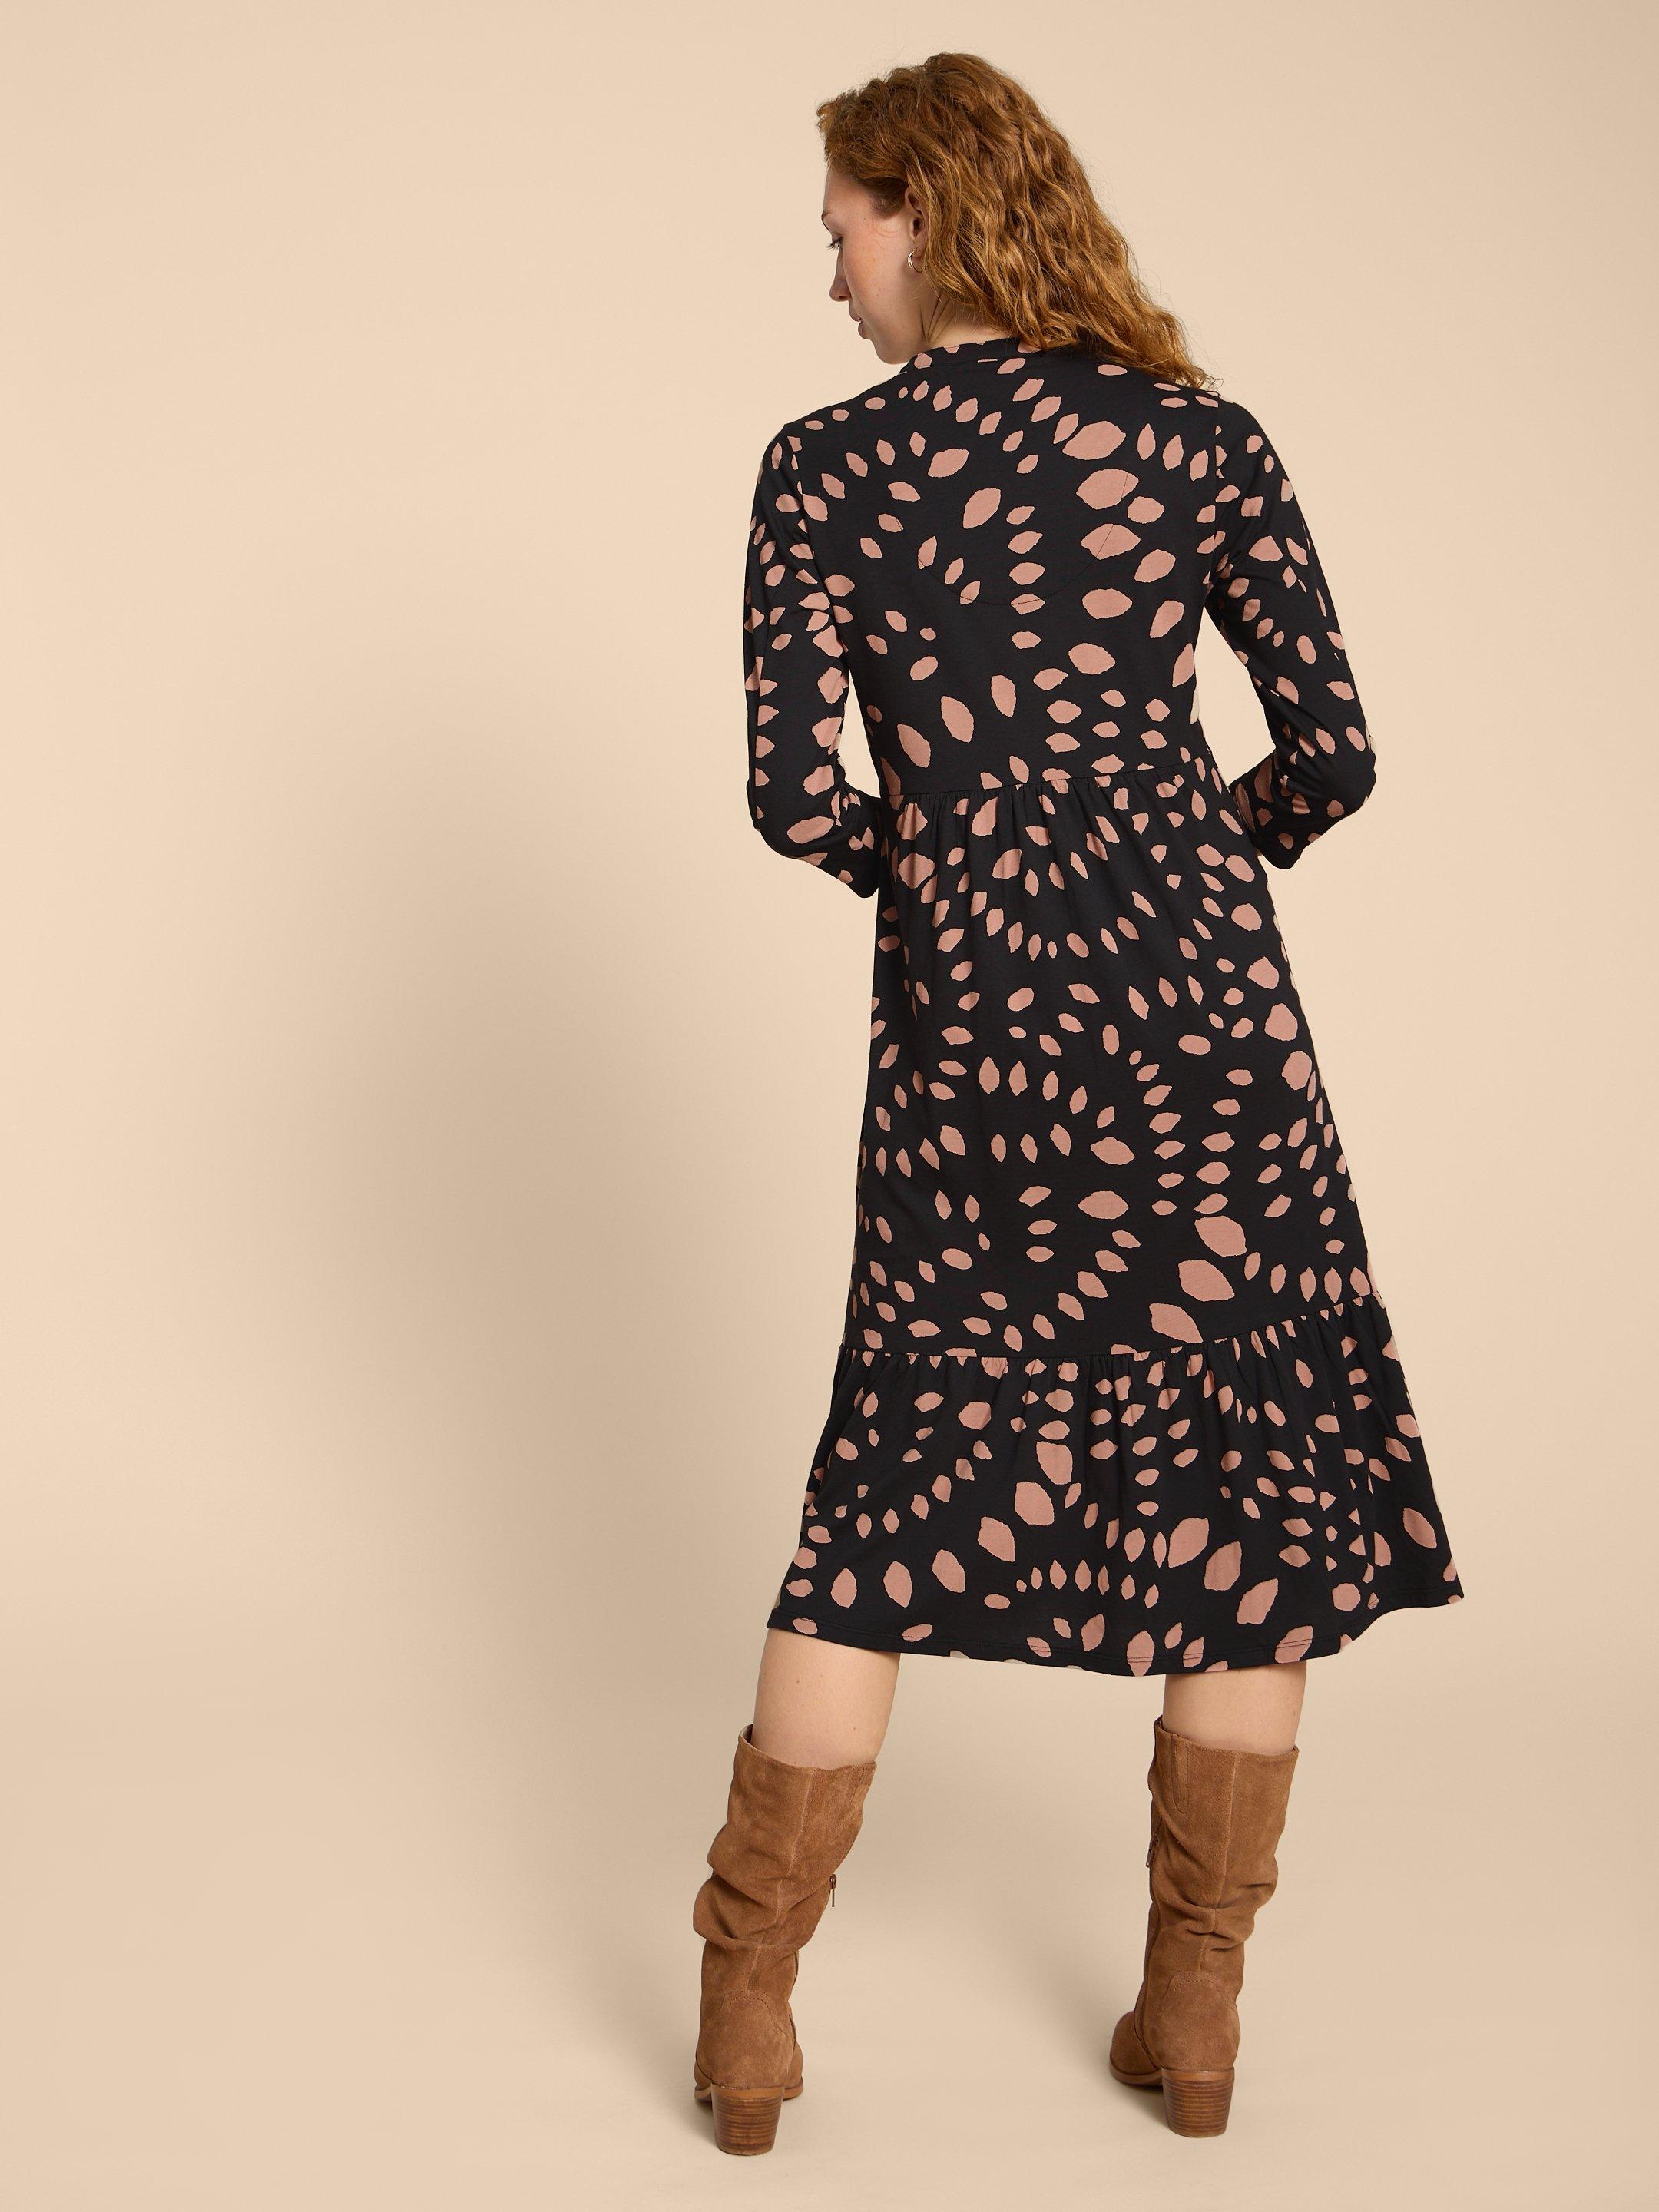 Naya Print Jersey Dress in BLK PR - MODEL BACK